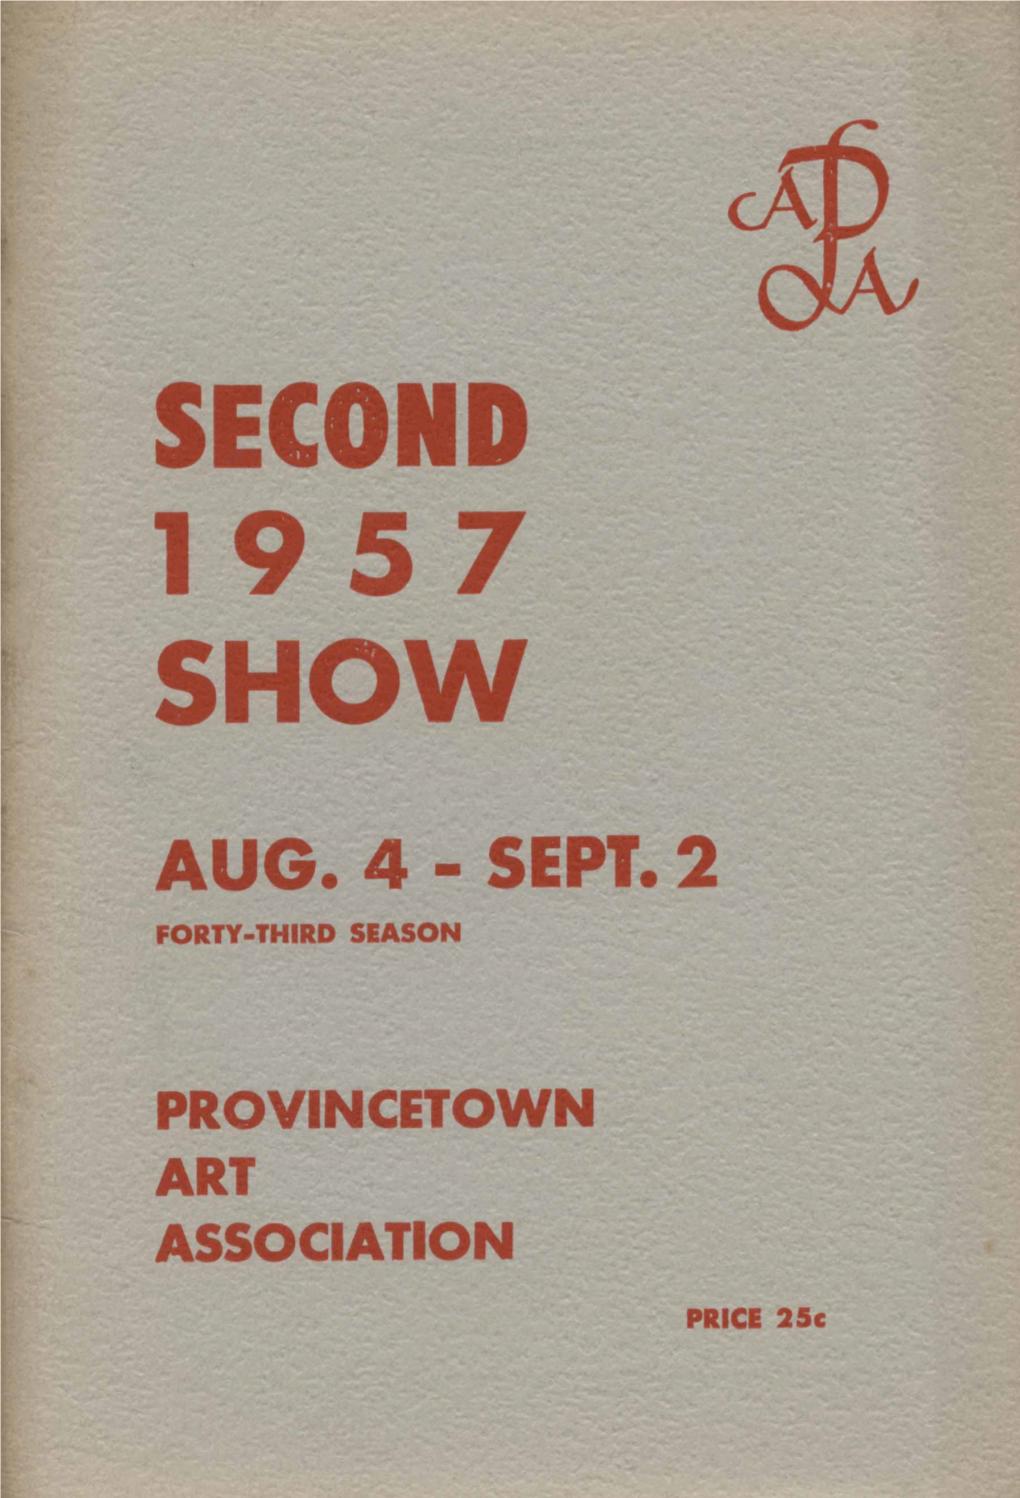 Second 1957 Show